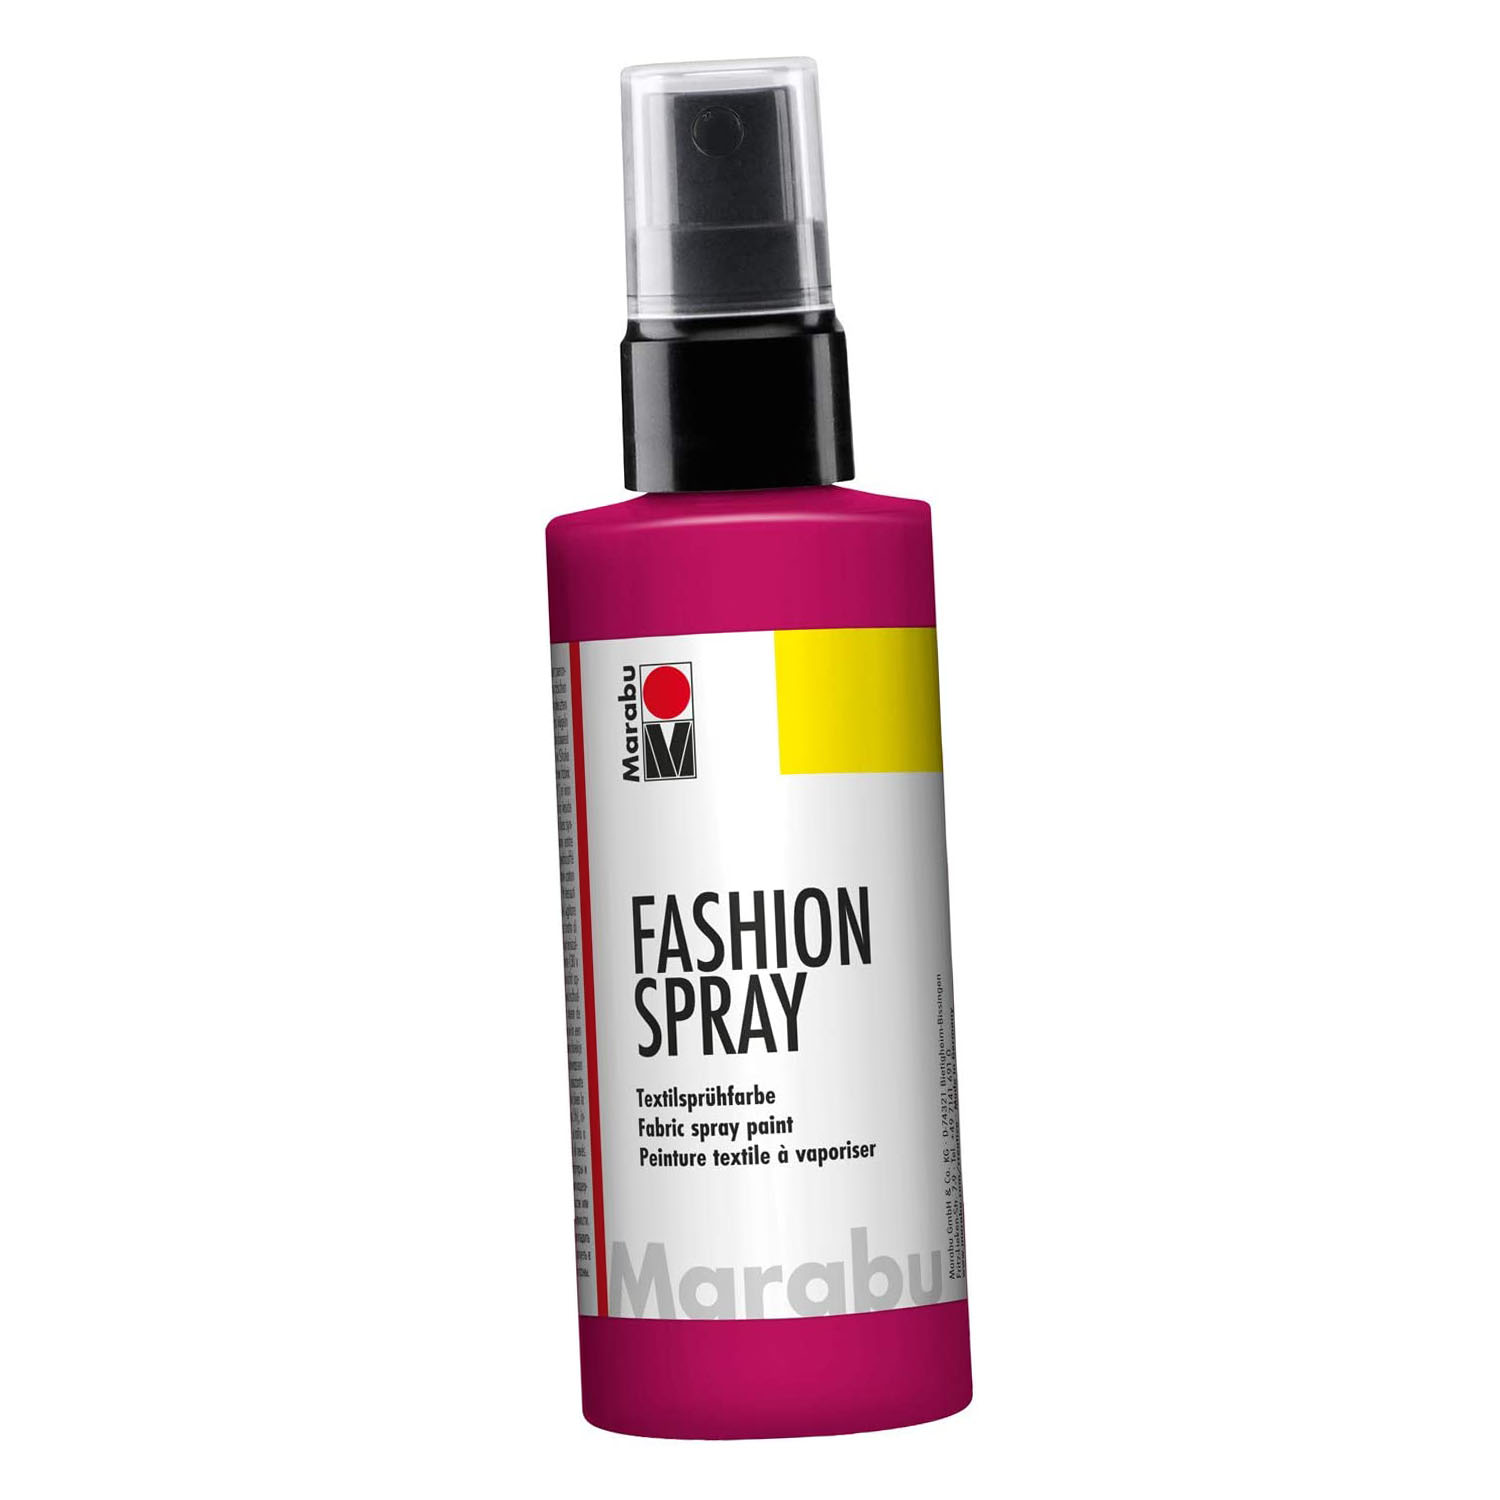 Marabu Textilsprhfarbe Fashion-Spray, himbeere, 100 ml